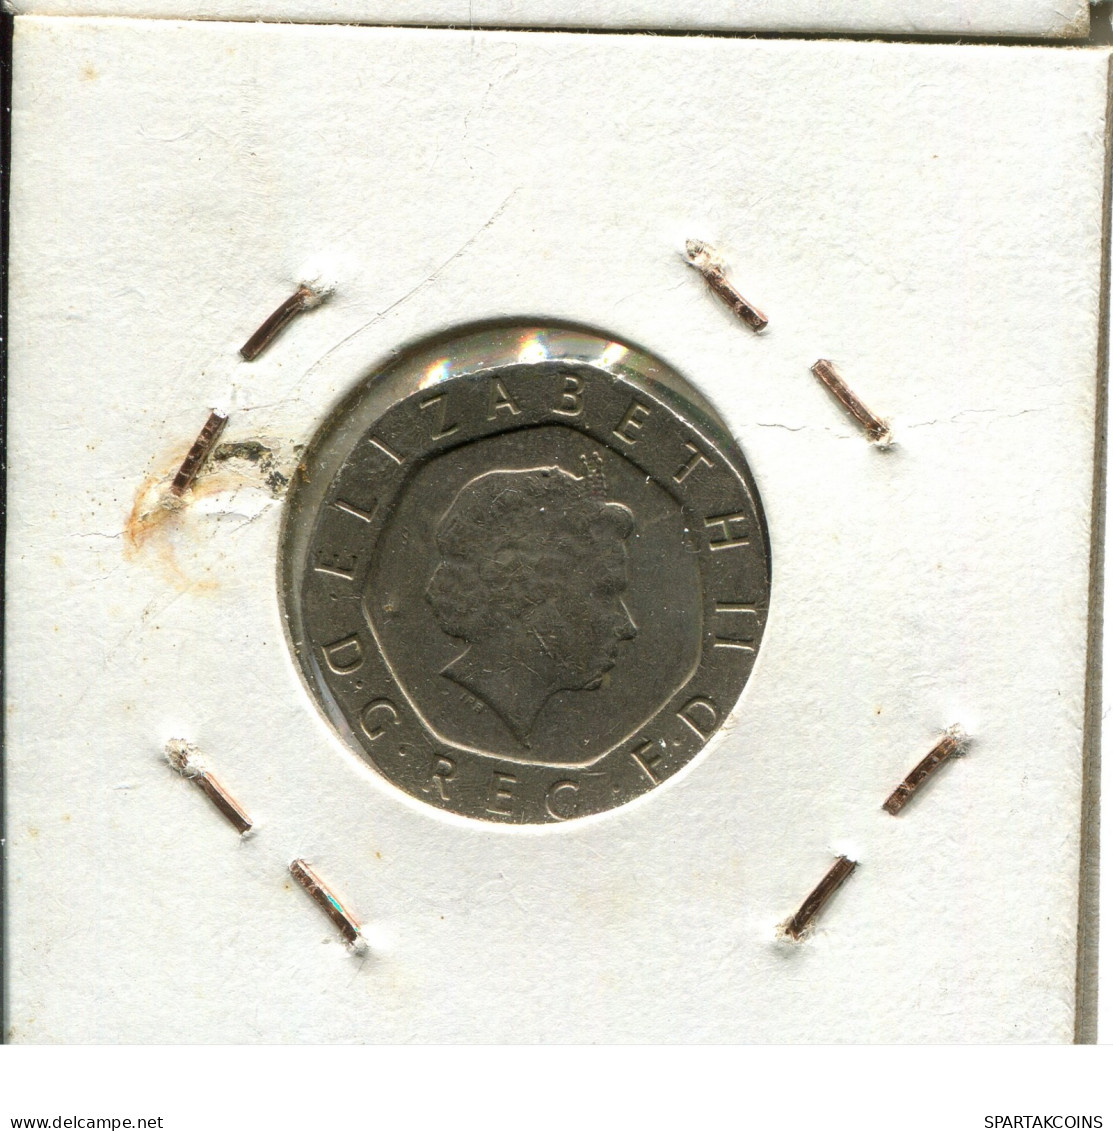 20 PENCE 1999 UK GROßBRITANNIEN GREAT BRITAIN Münze #AW223.D.A - 20 Pence